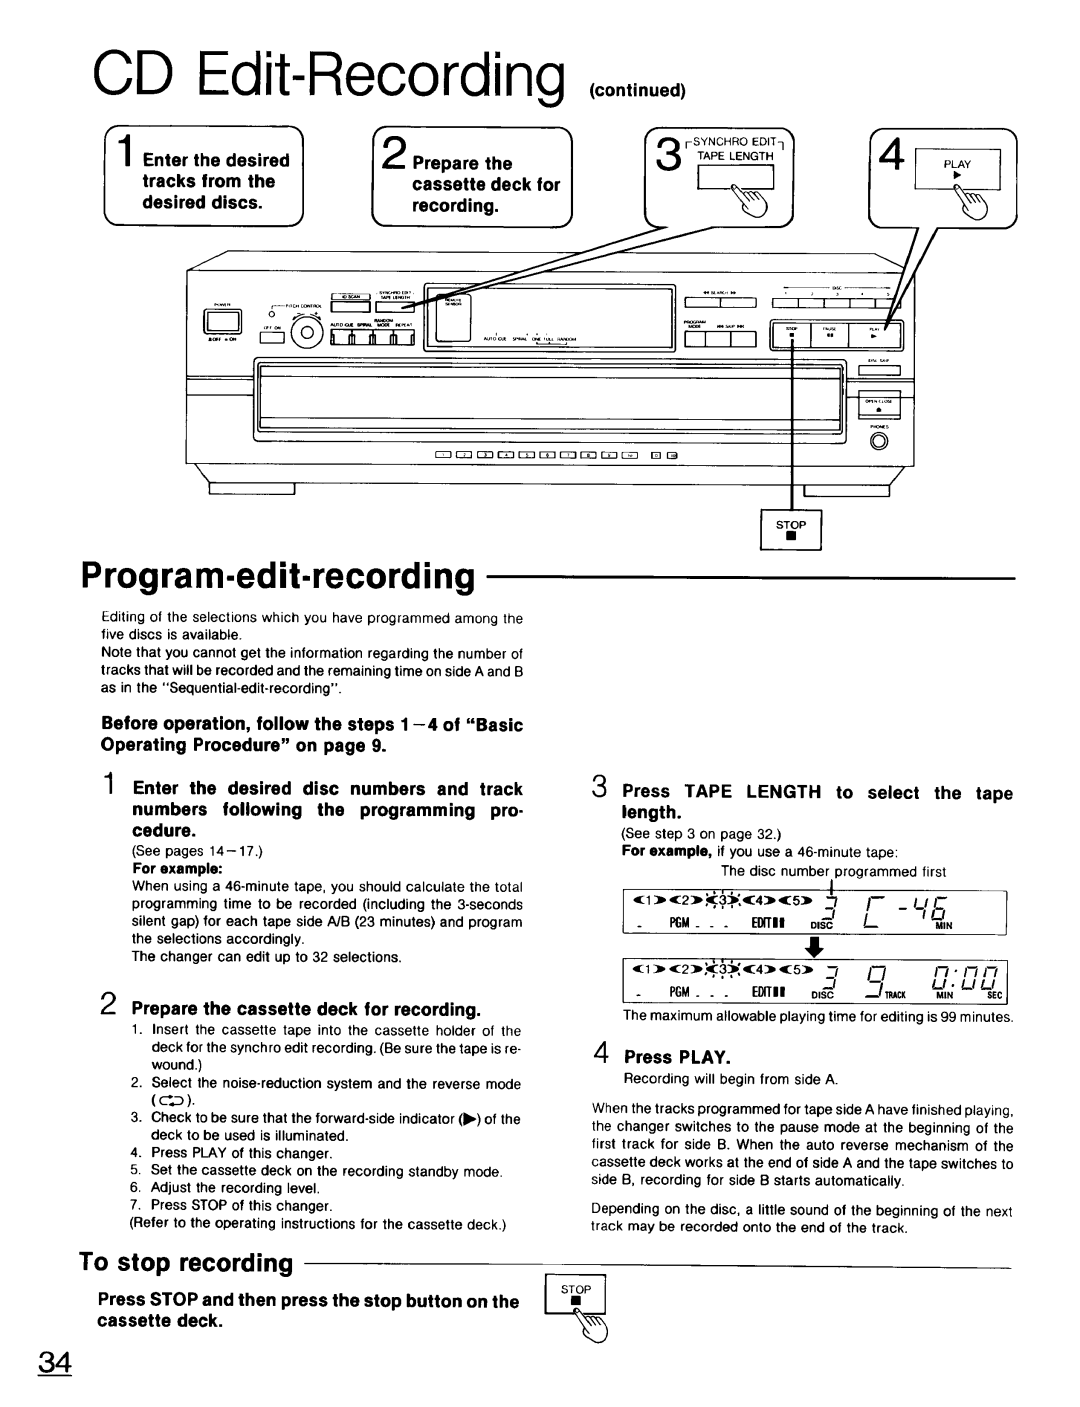 Technics SL-PD947 CD Edit-Recording ,oo.,,.uo, Prog ra rn.edit.re cord ing, Iz-!-I, Prepare, tracks, from the, cassette 